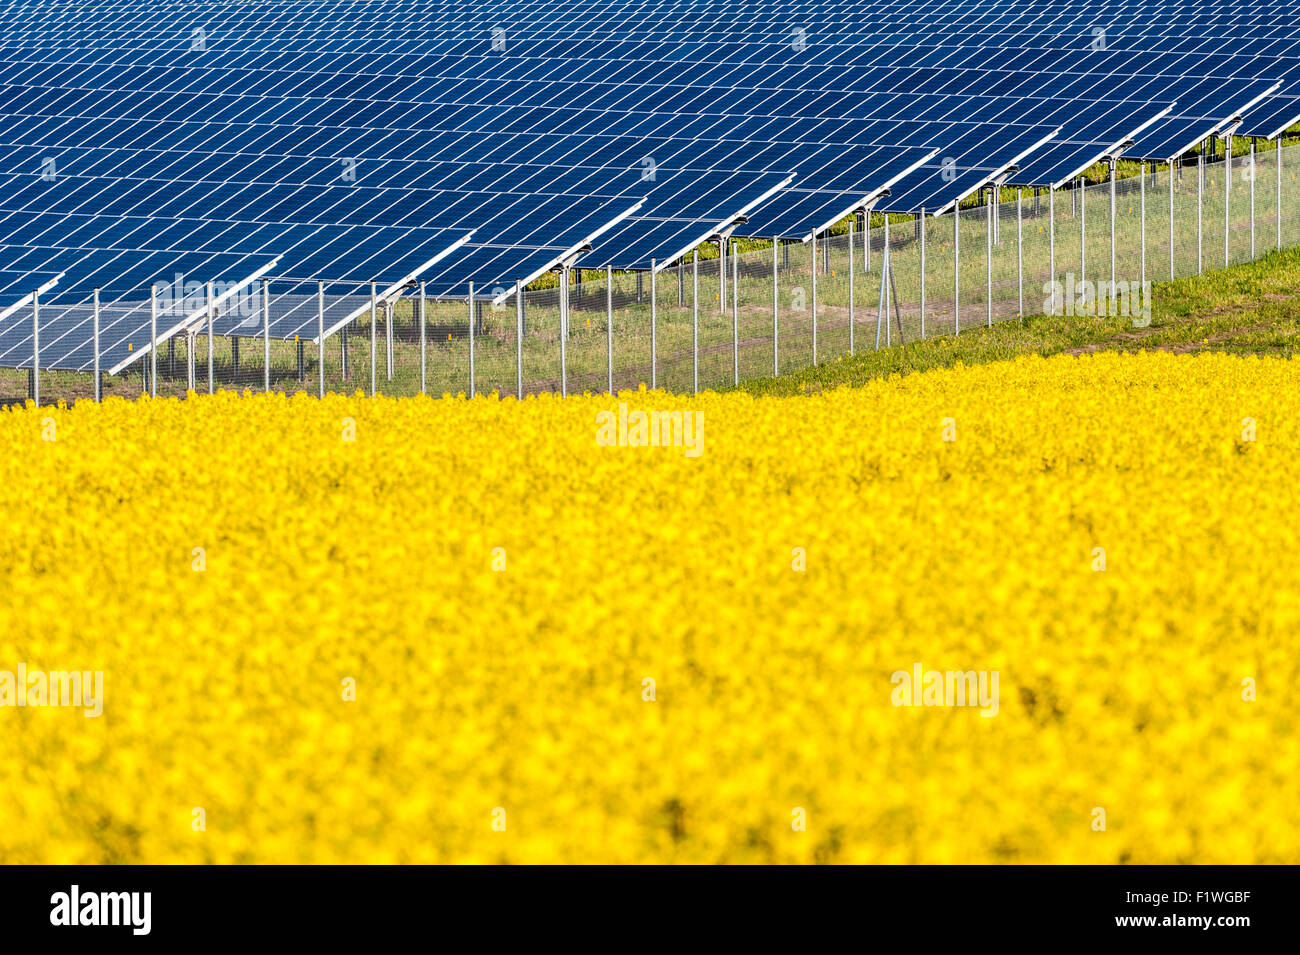 Vor Solarpanele blühendem Rapsfeld Foto de stock